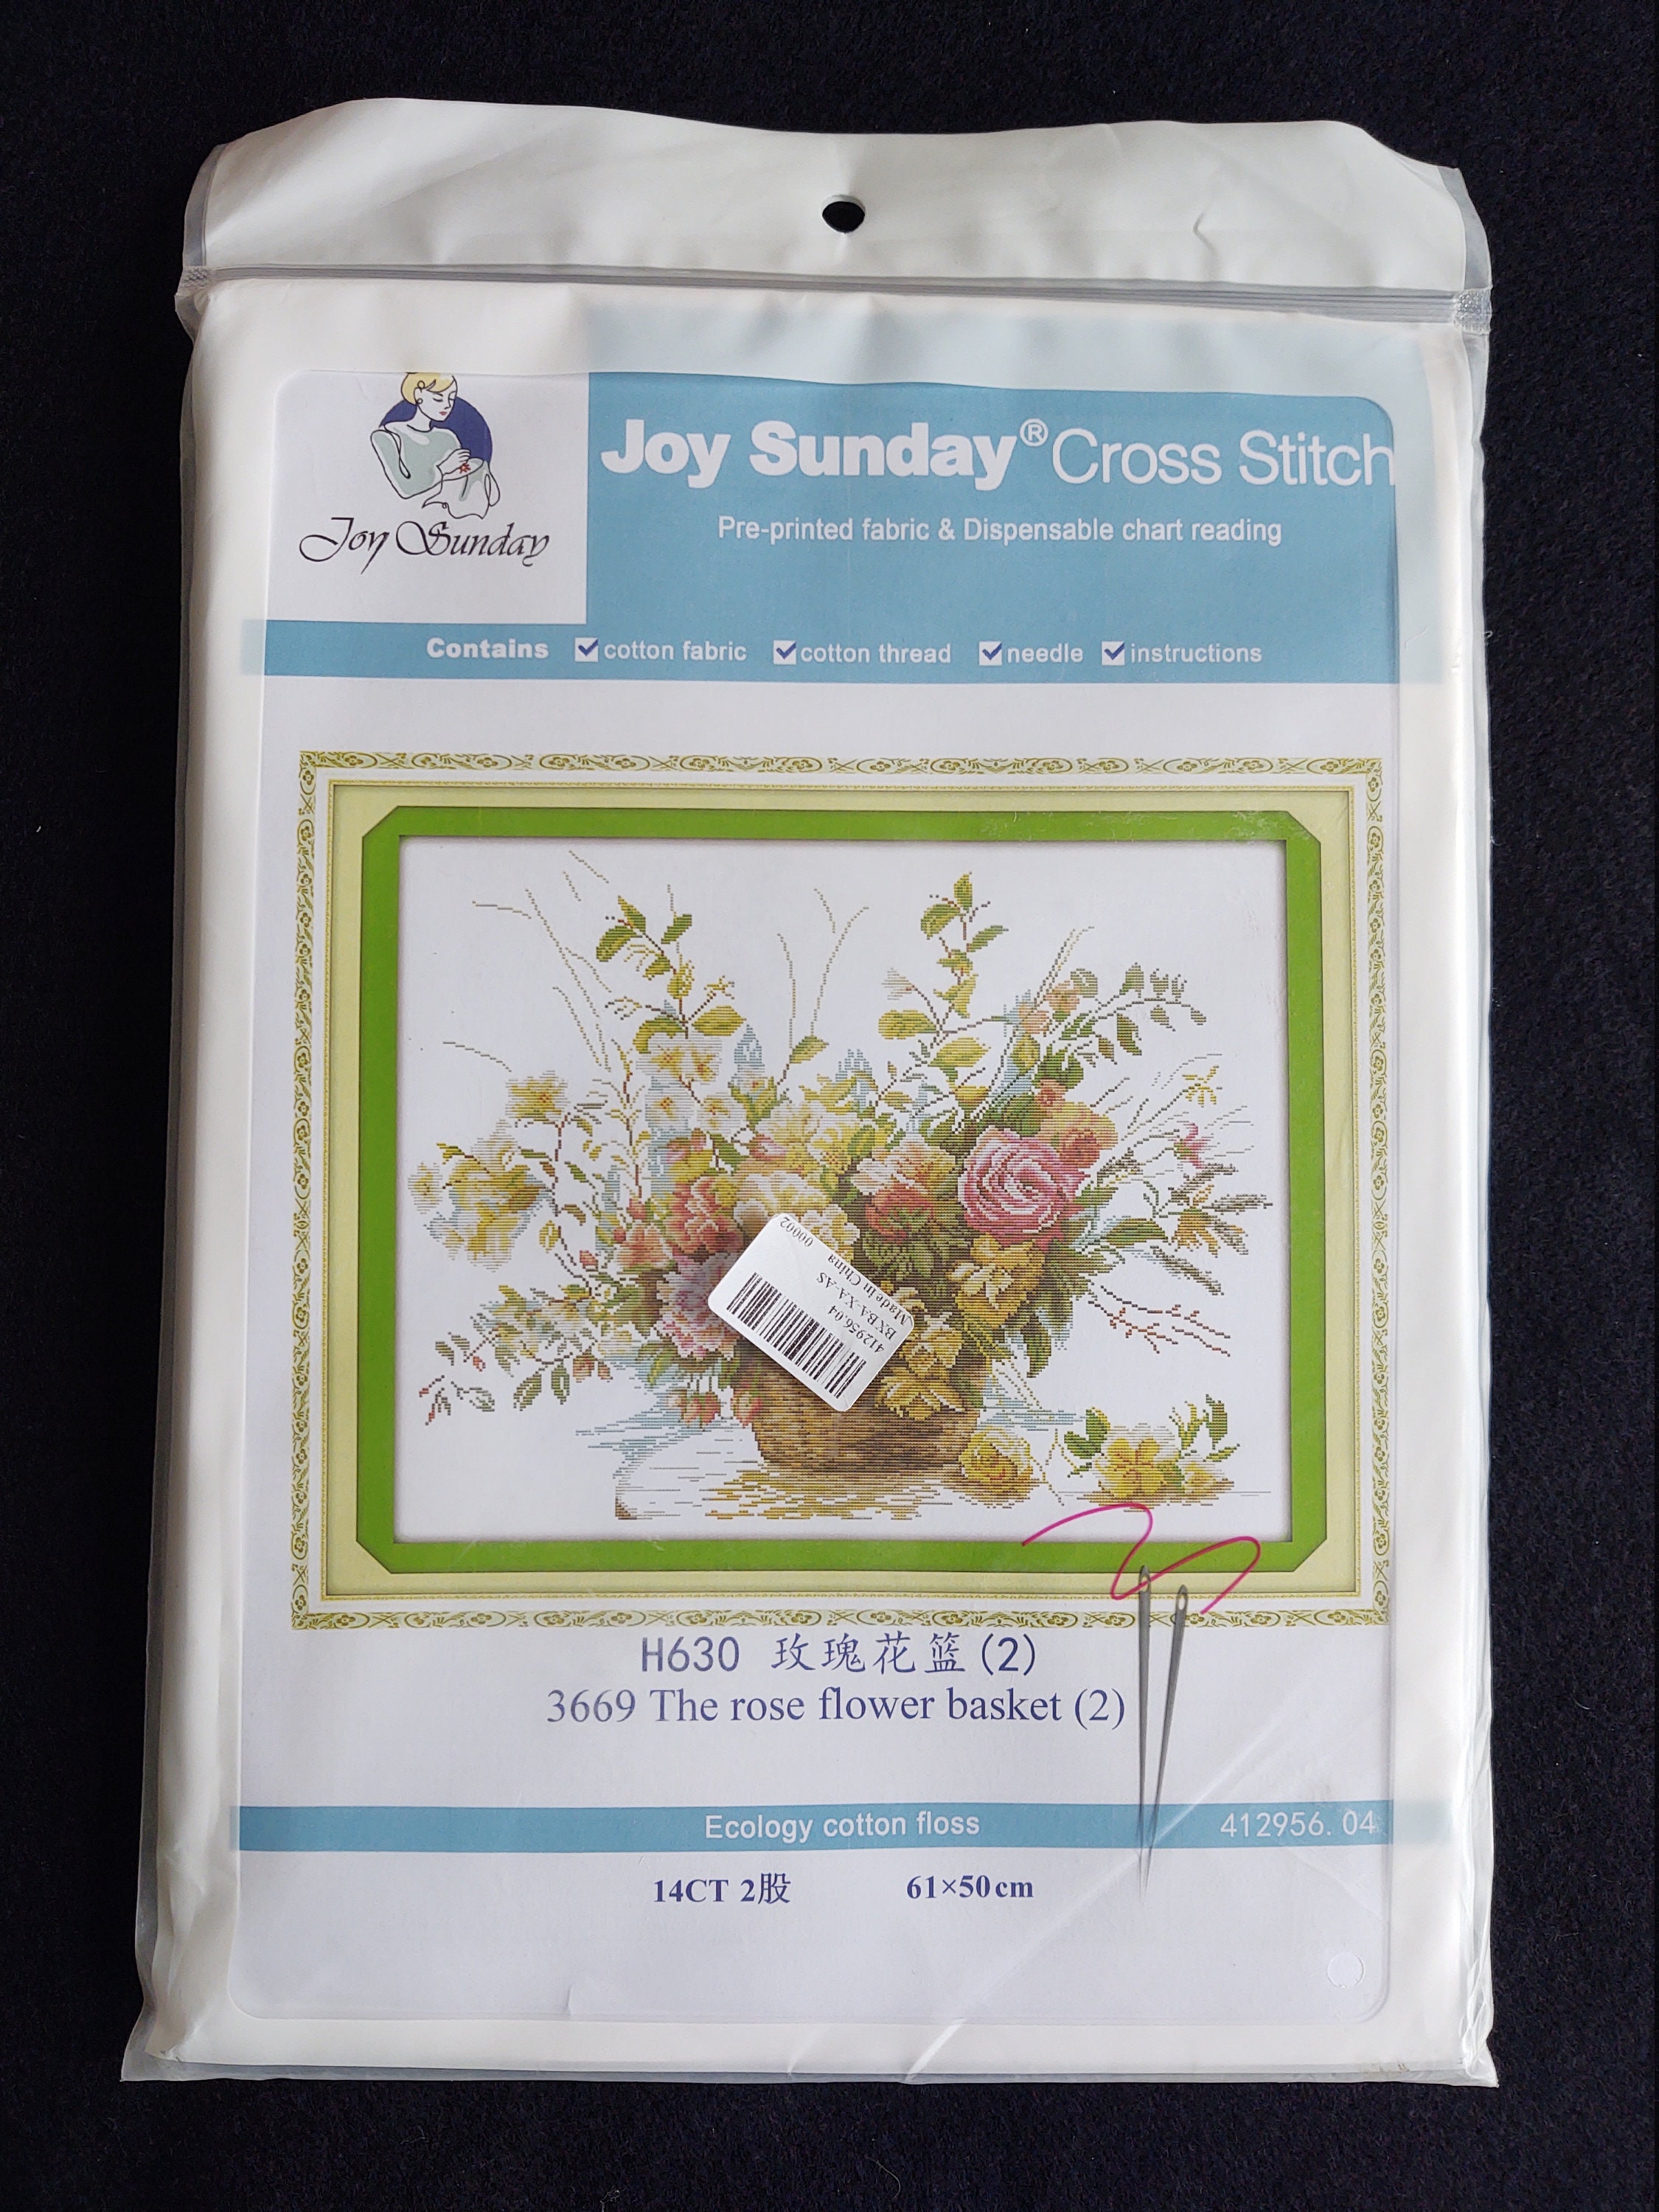 Loops & Threads Choose Joy Cross Stitch Kit - 3.5 x 3.5 in